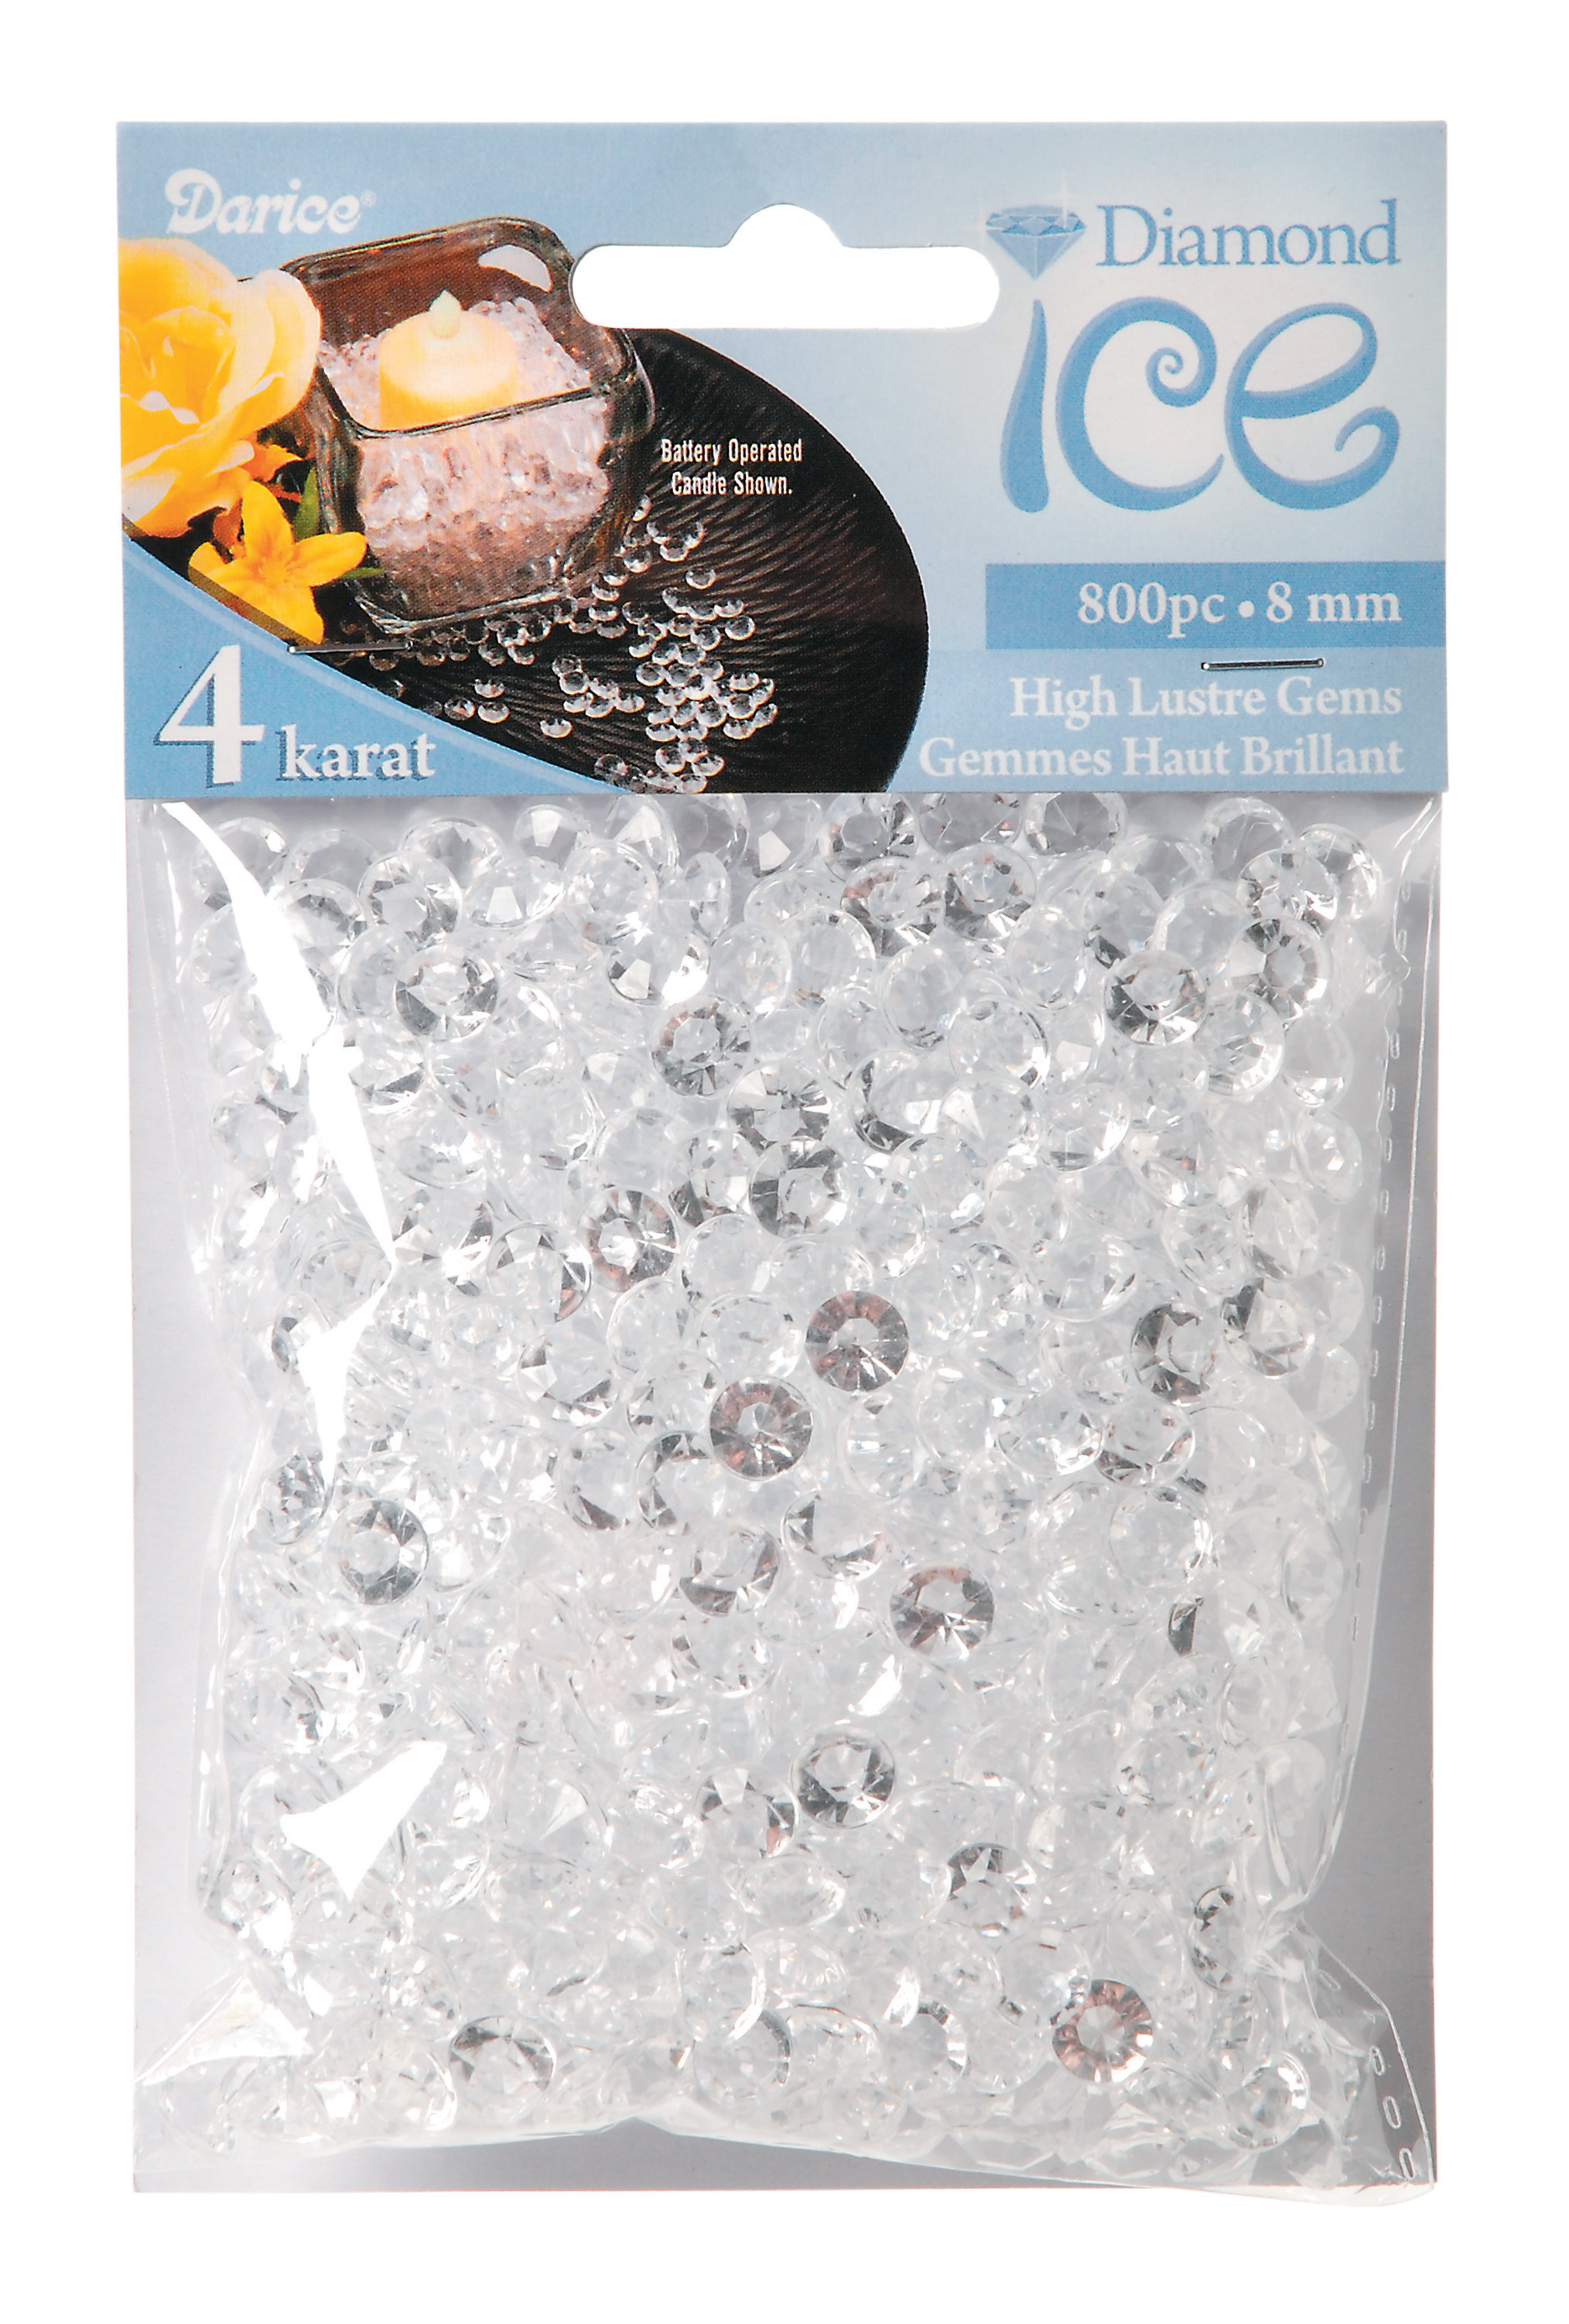 Darice Clear Diamond Ice Gems, 4 Carat, 800 Pieces - image 5 of 5